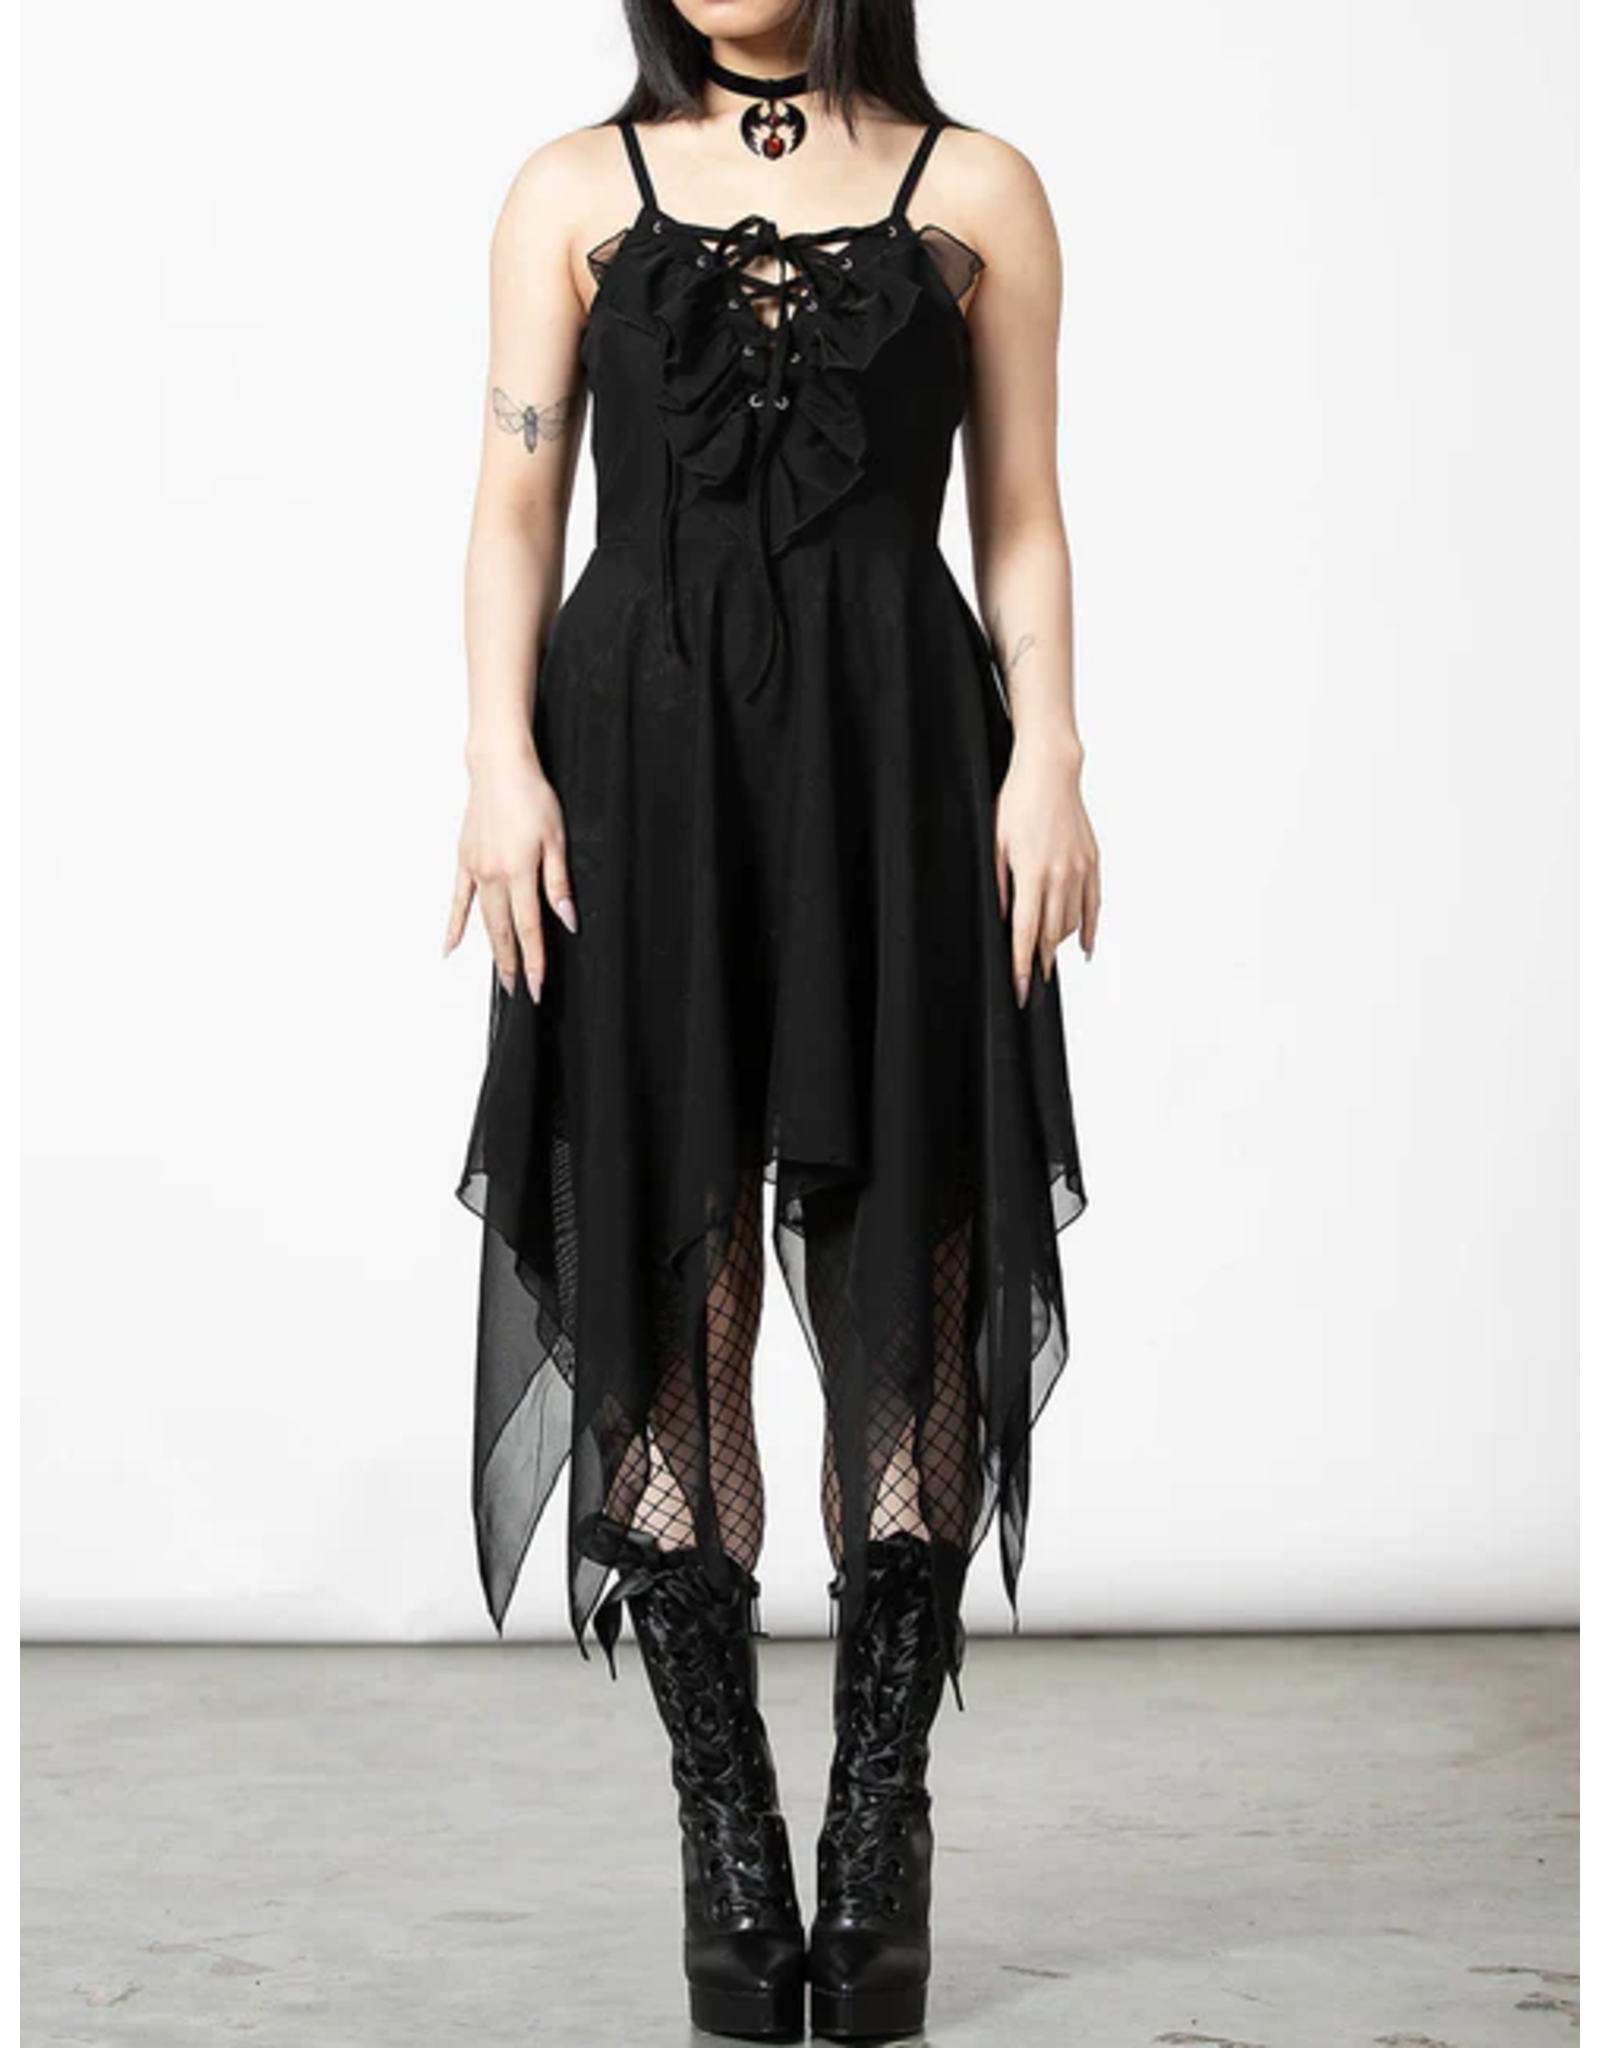 Anshee Lace-Up Dress Black